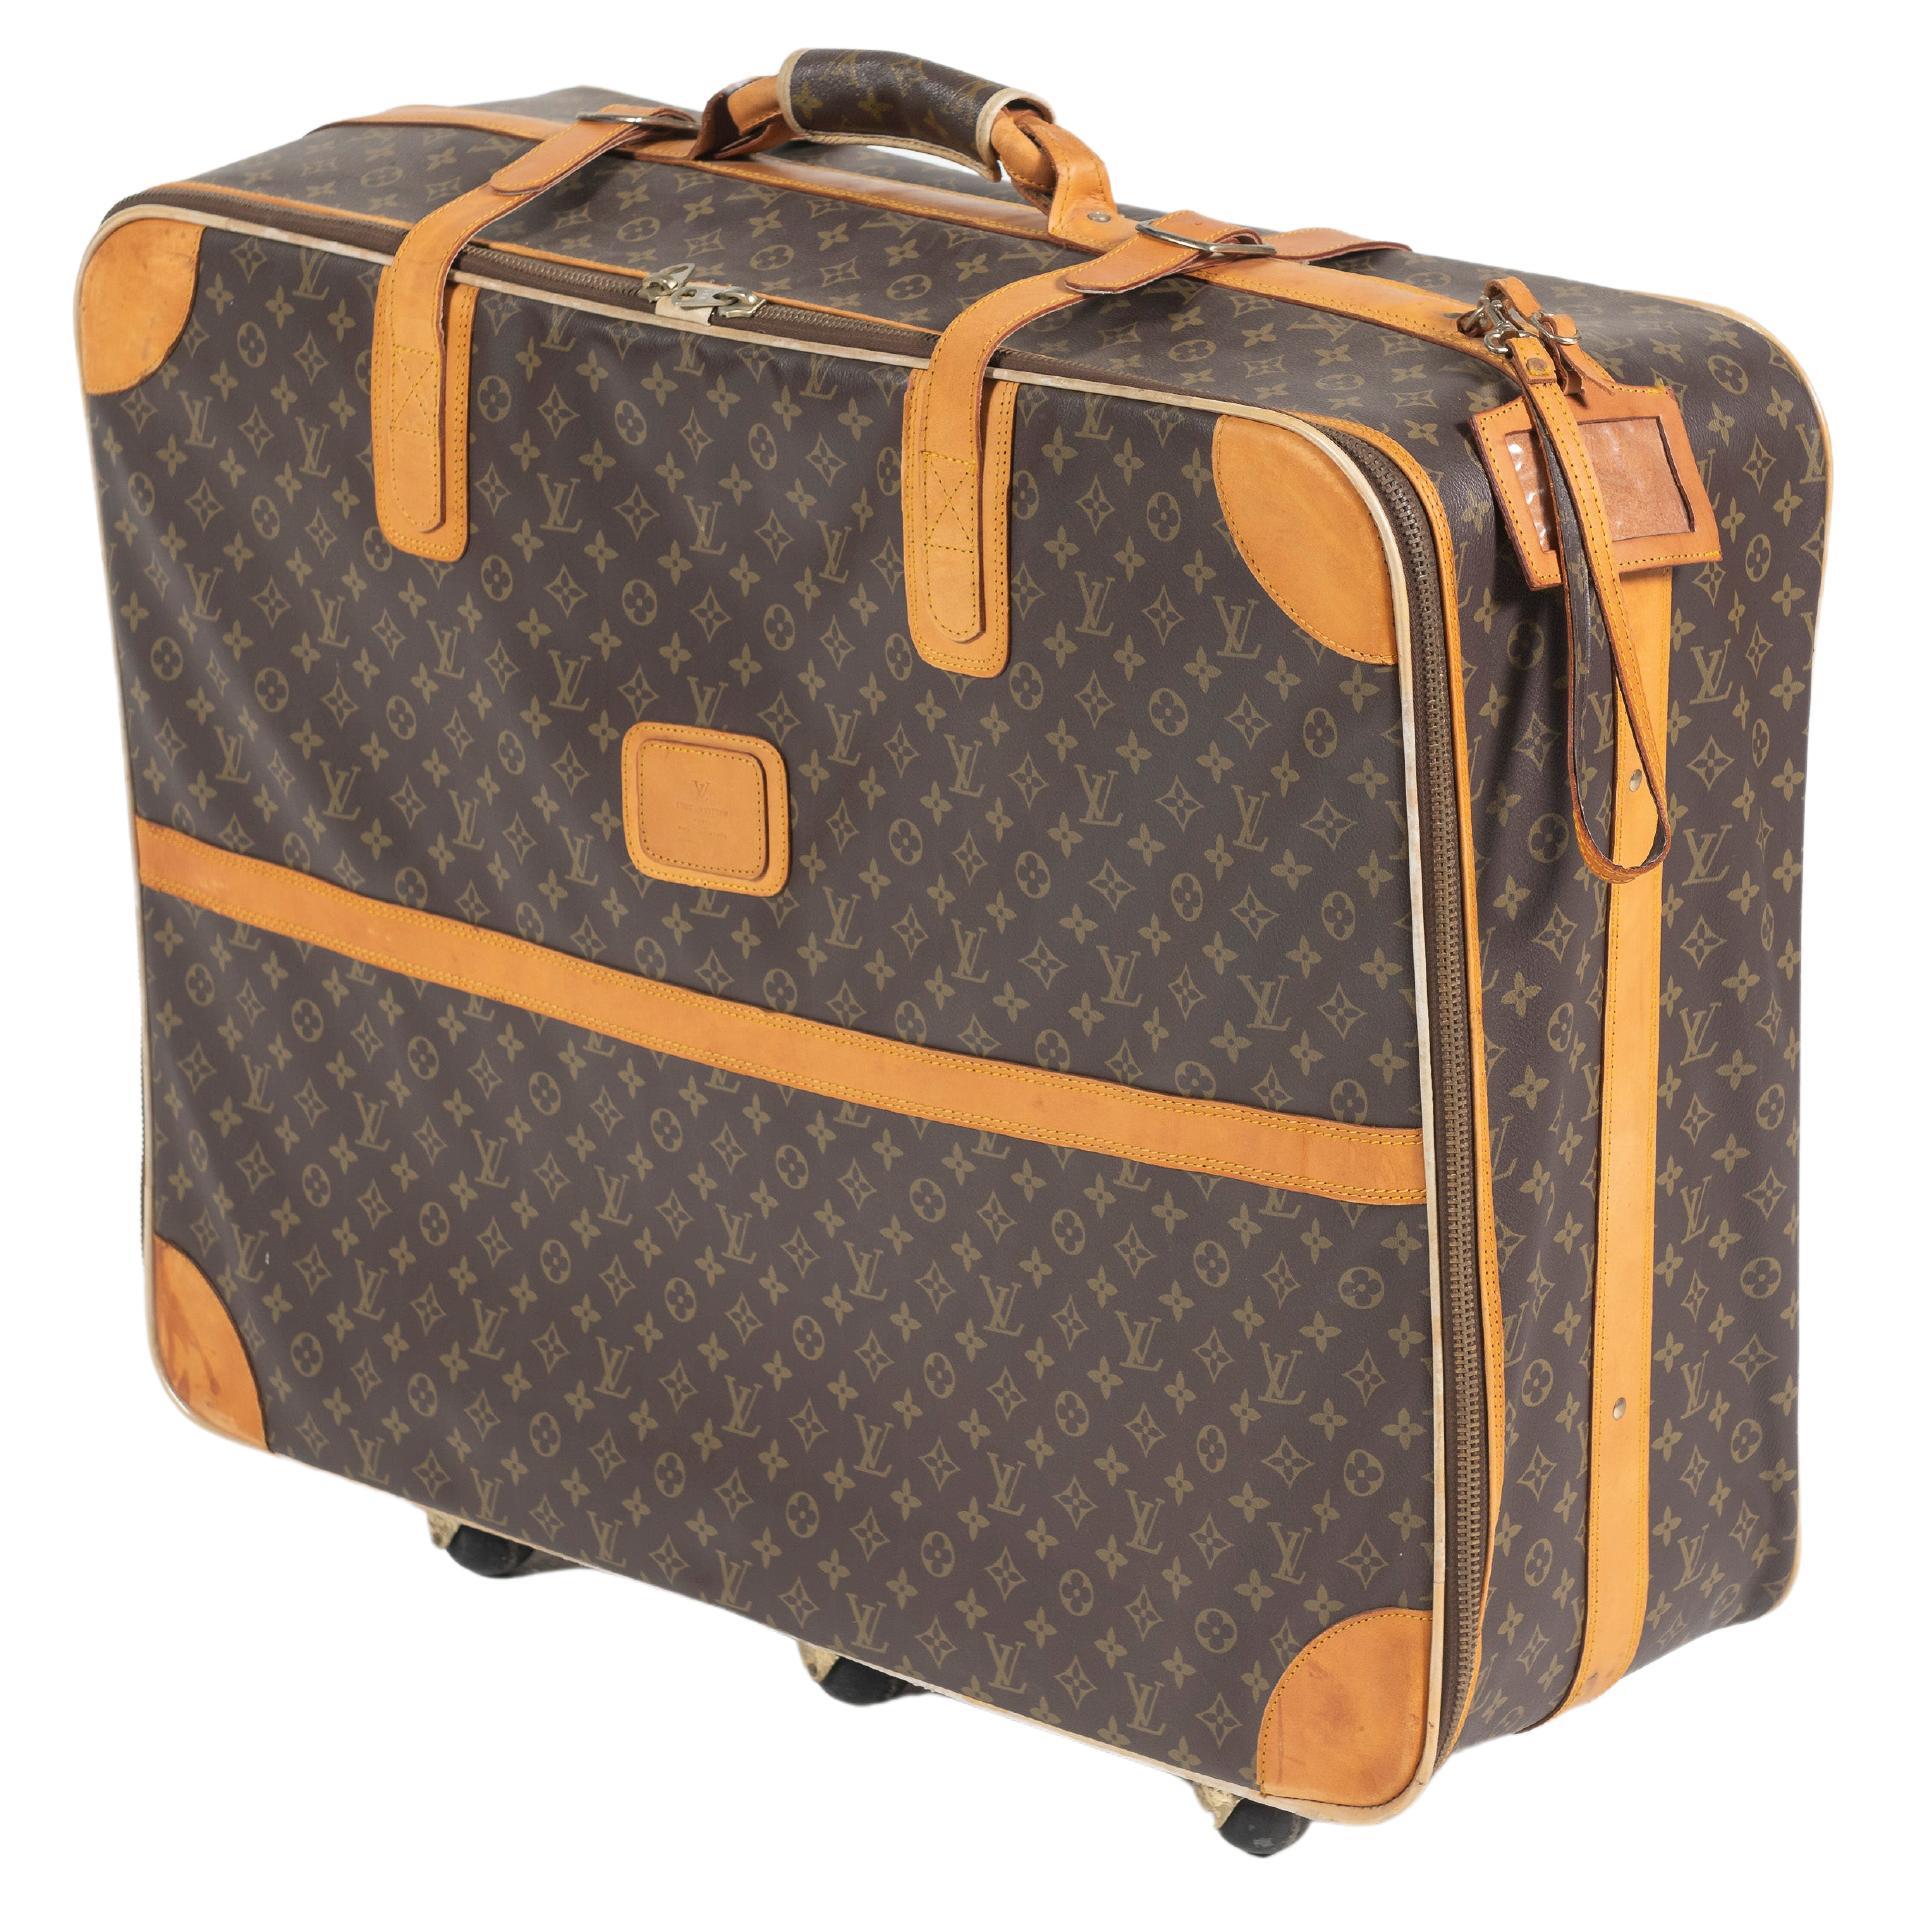 Vintage Louis Vuitton Suitcase, Monogrammed Coated Canvas, Large-Sized For Sale